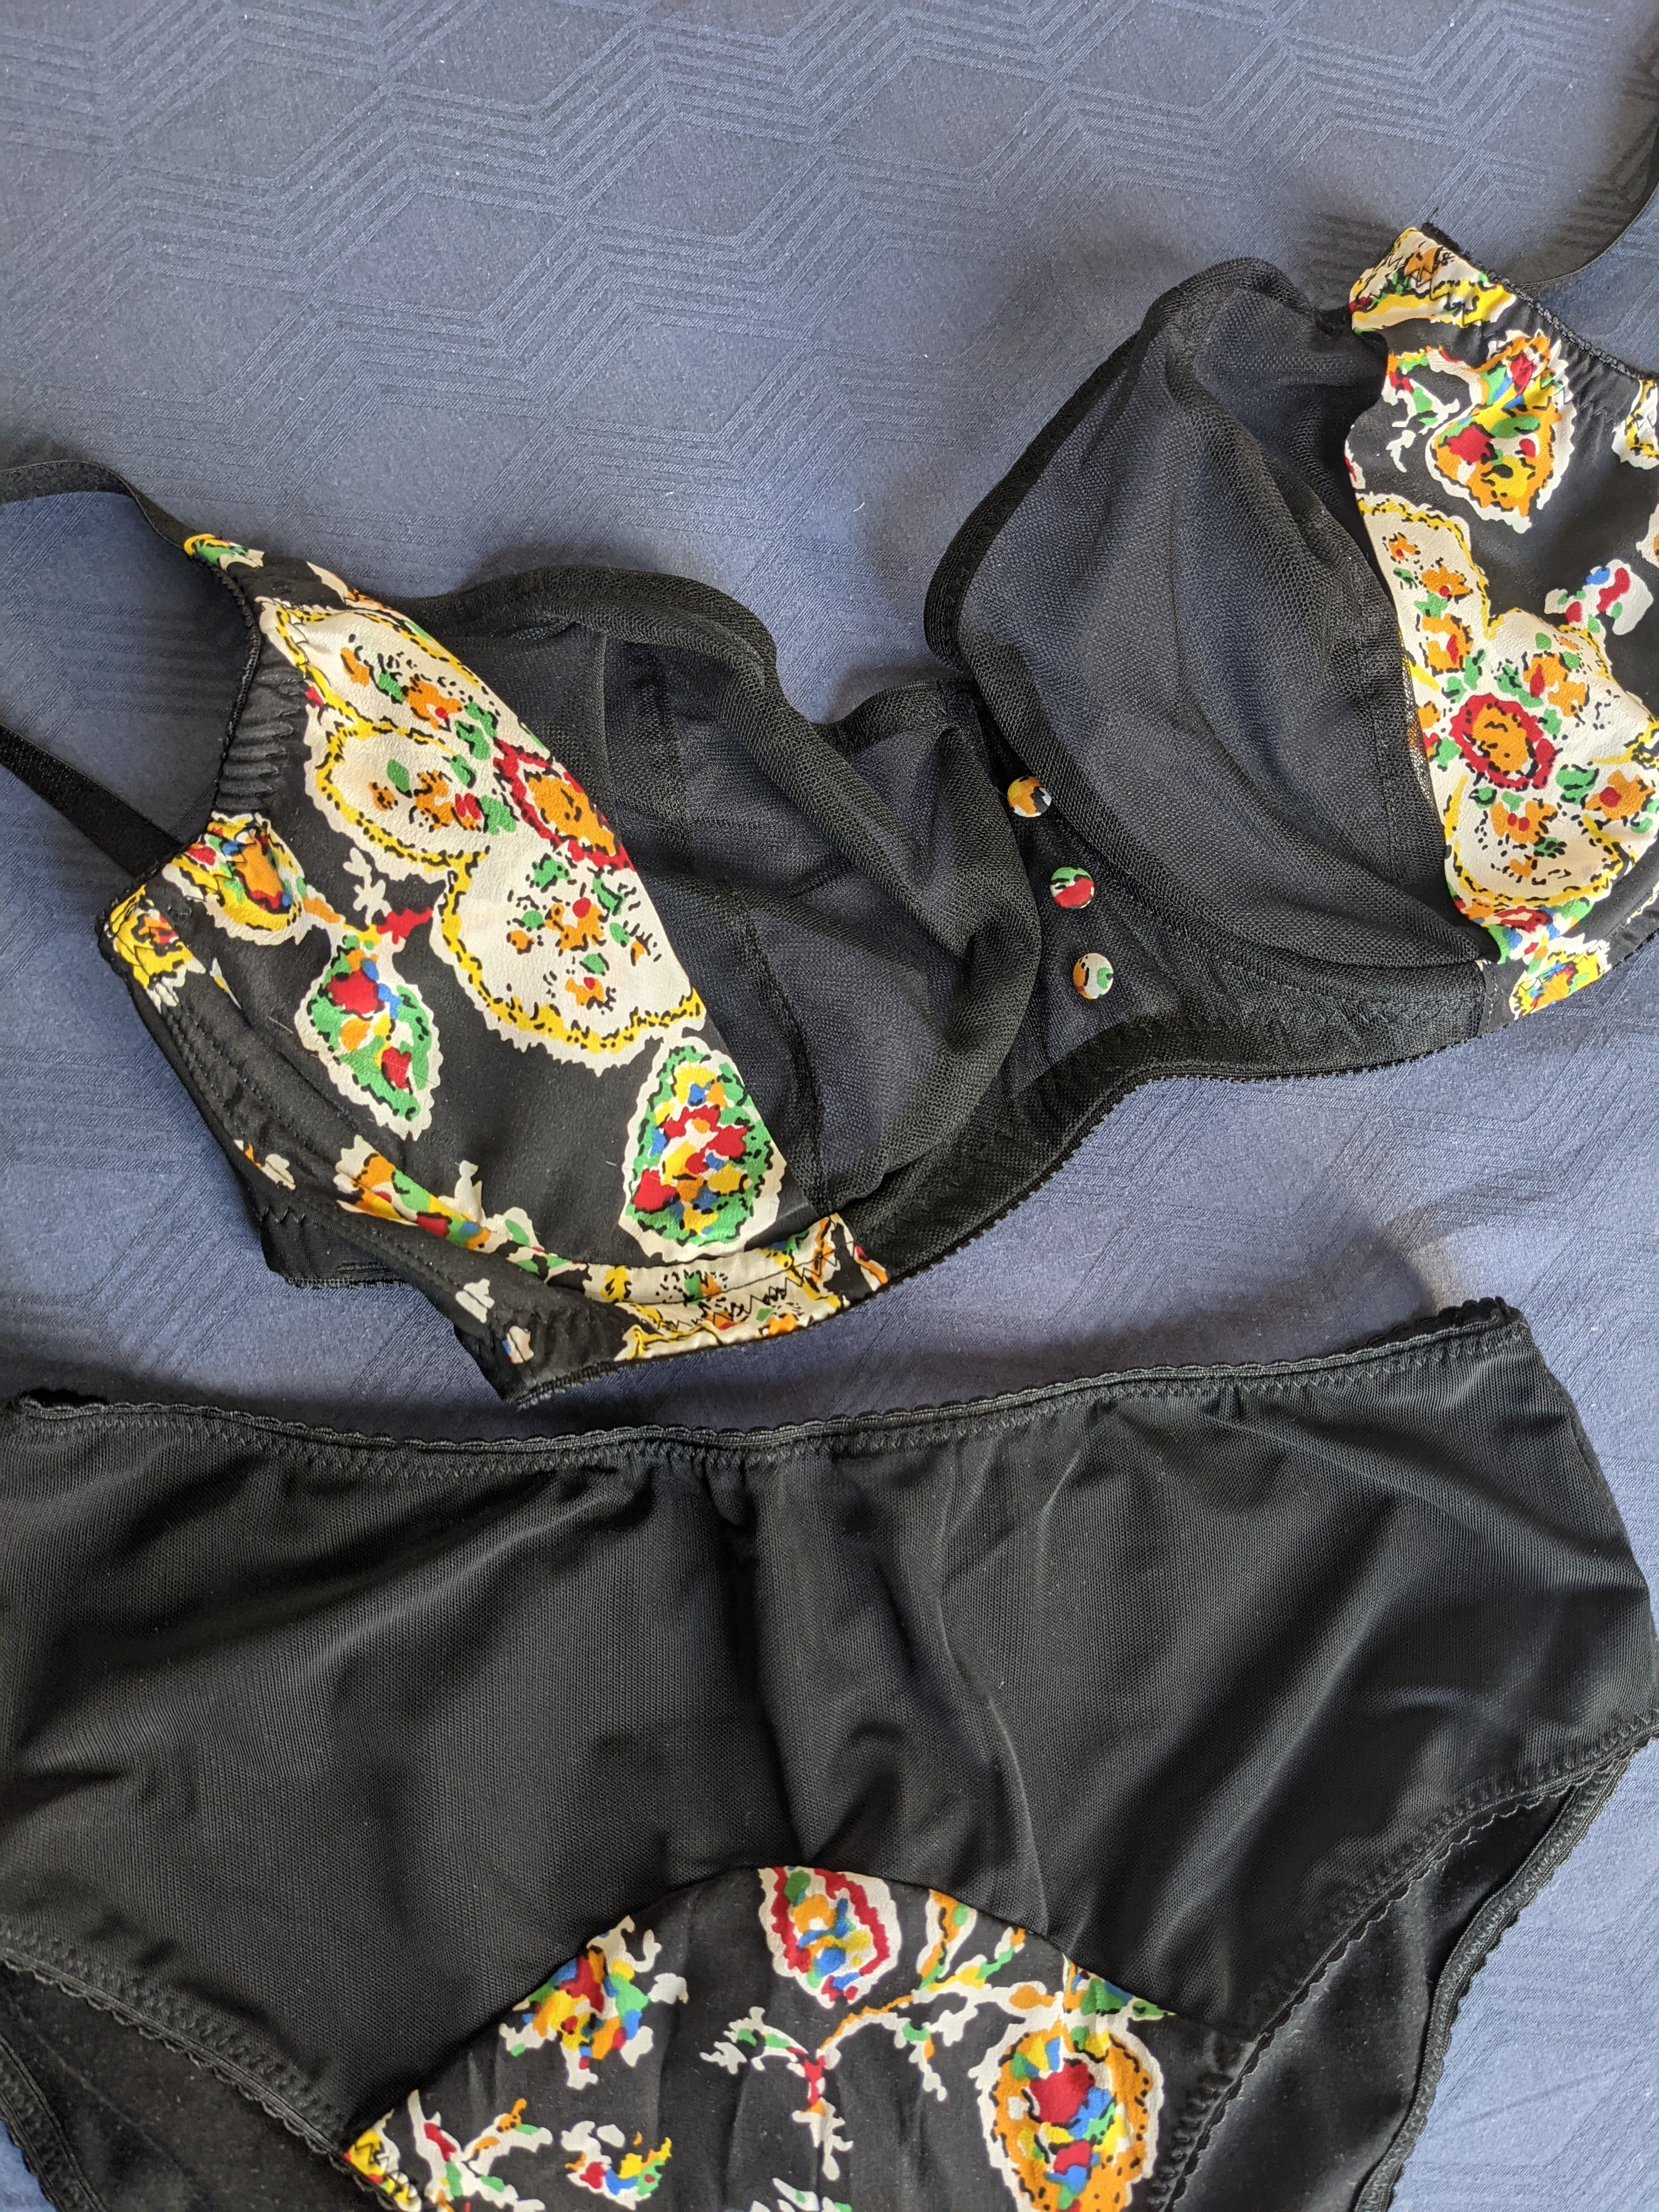 Black Flowery Set - Black Beauty bra + Ava panties